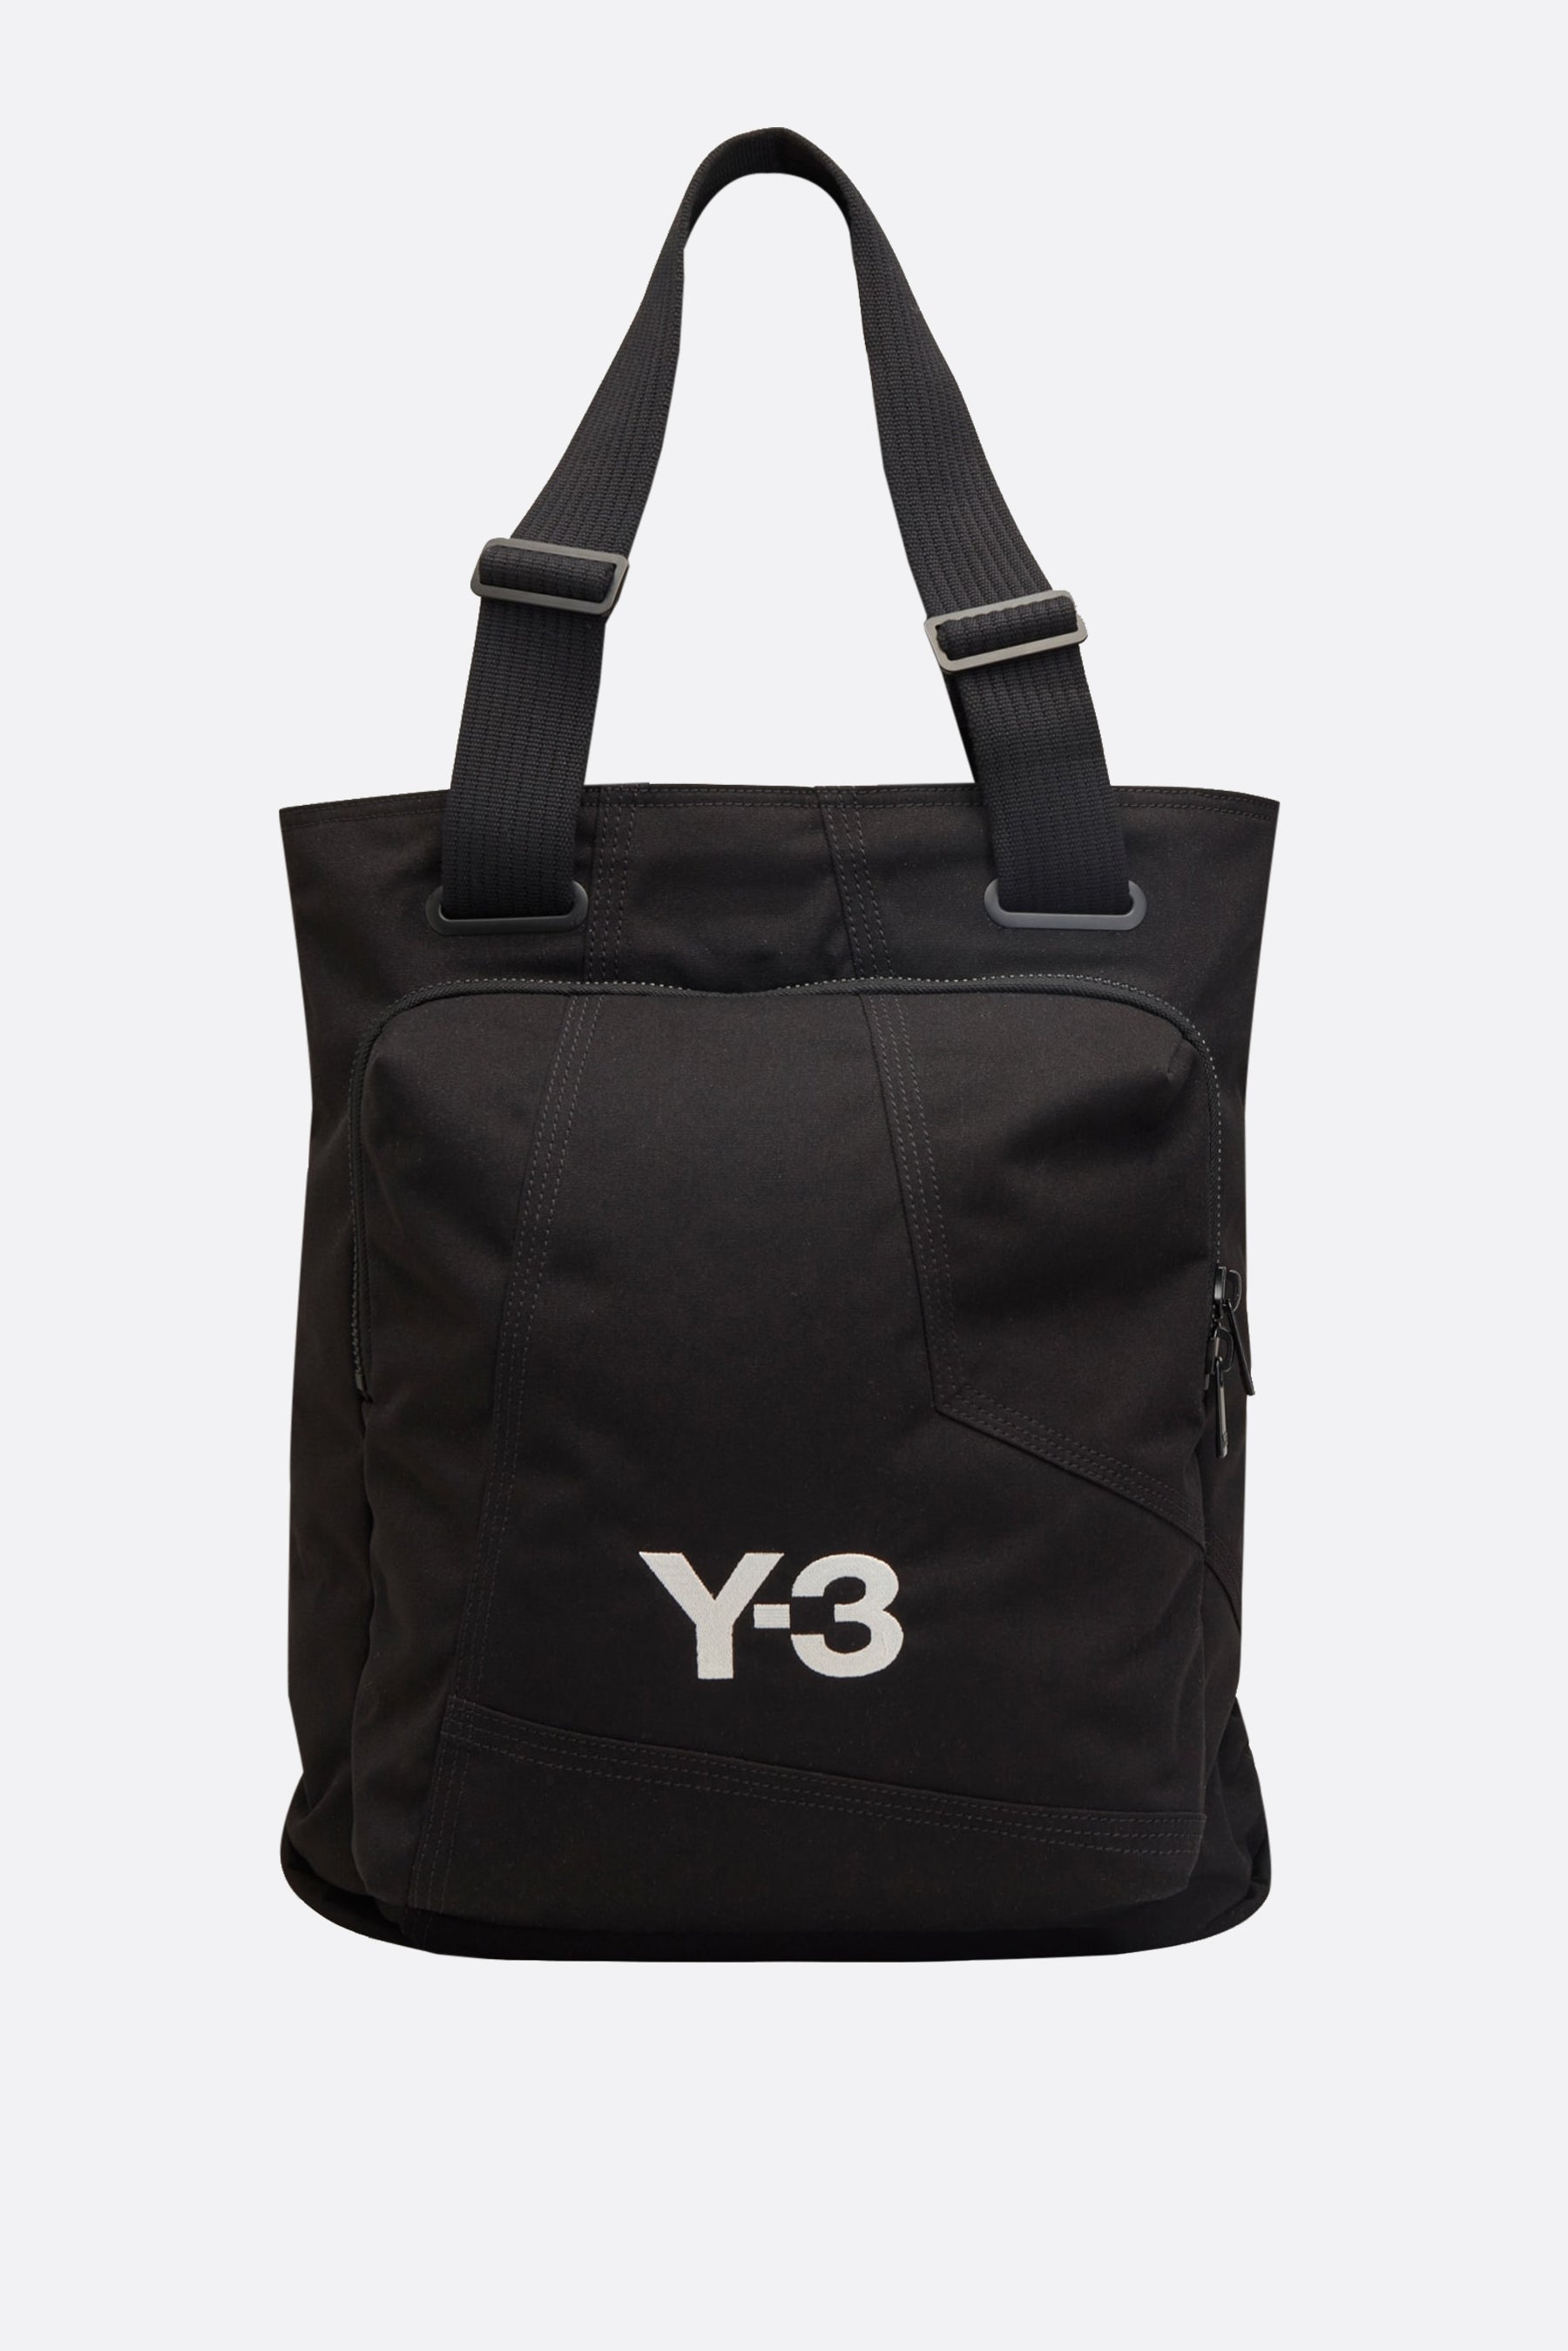 Y-3 Classic canvas tote bag